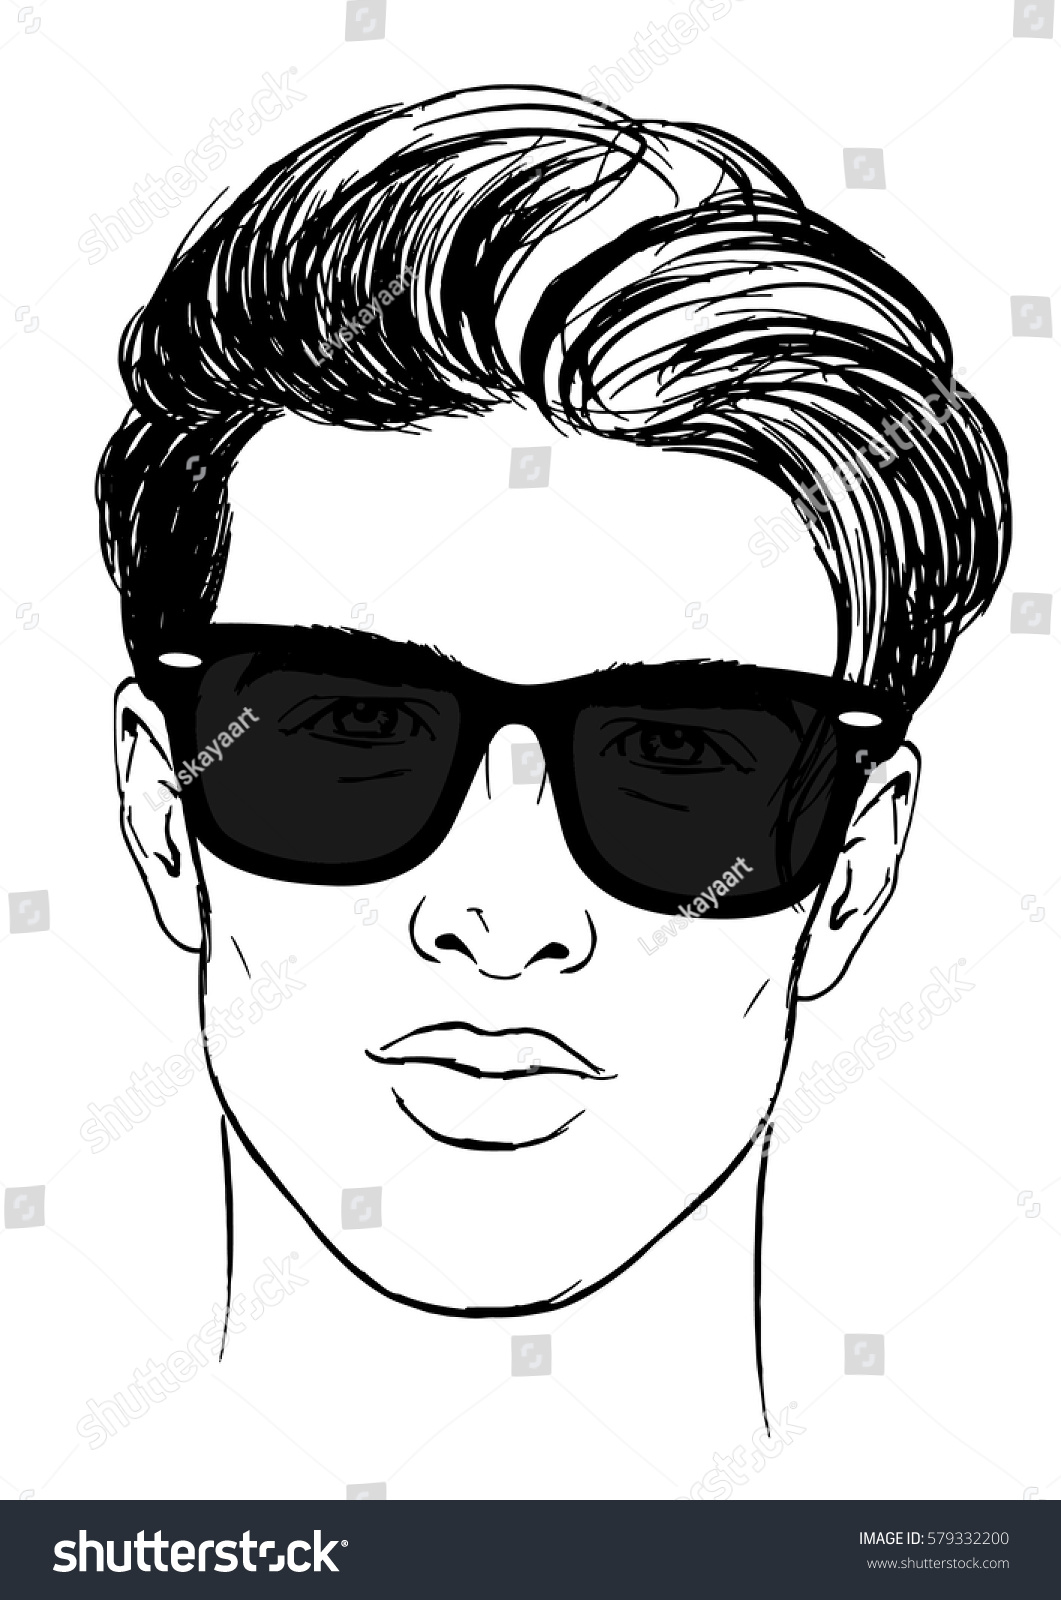 Zdaj Woods lahka Misel mini Opazovalec males with sunglasses drawing ...